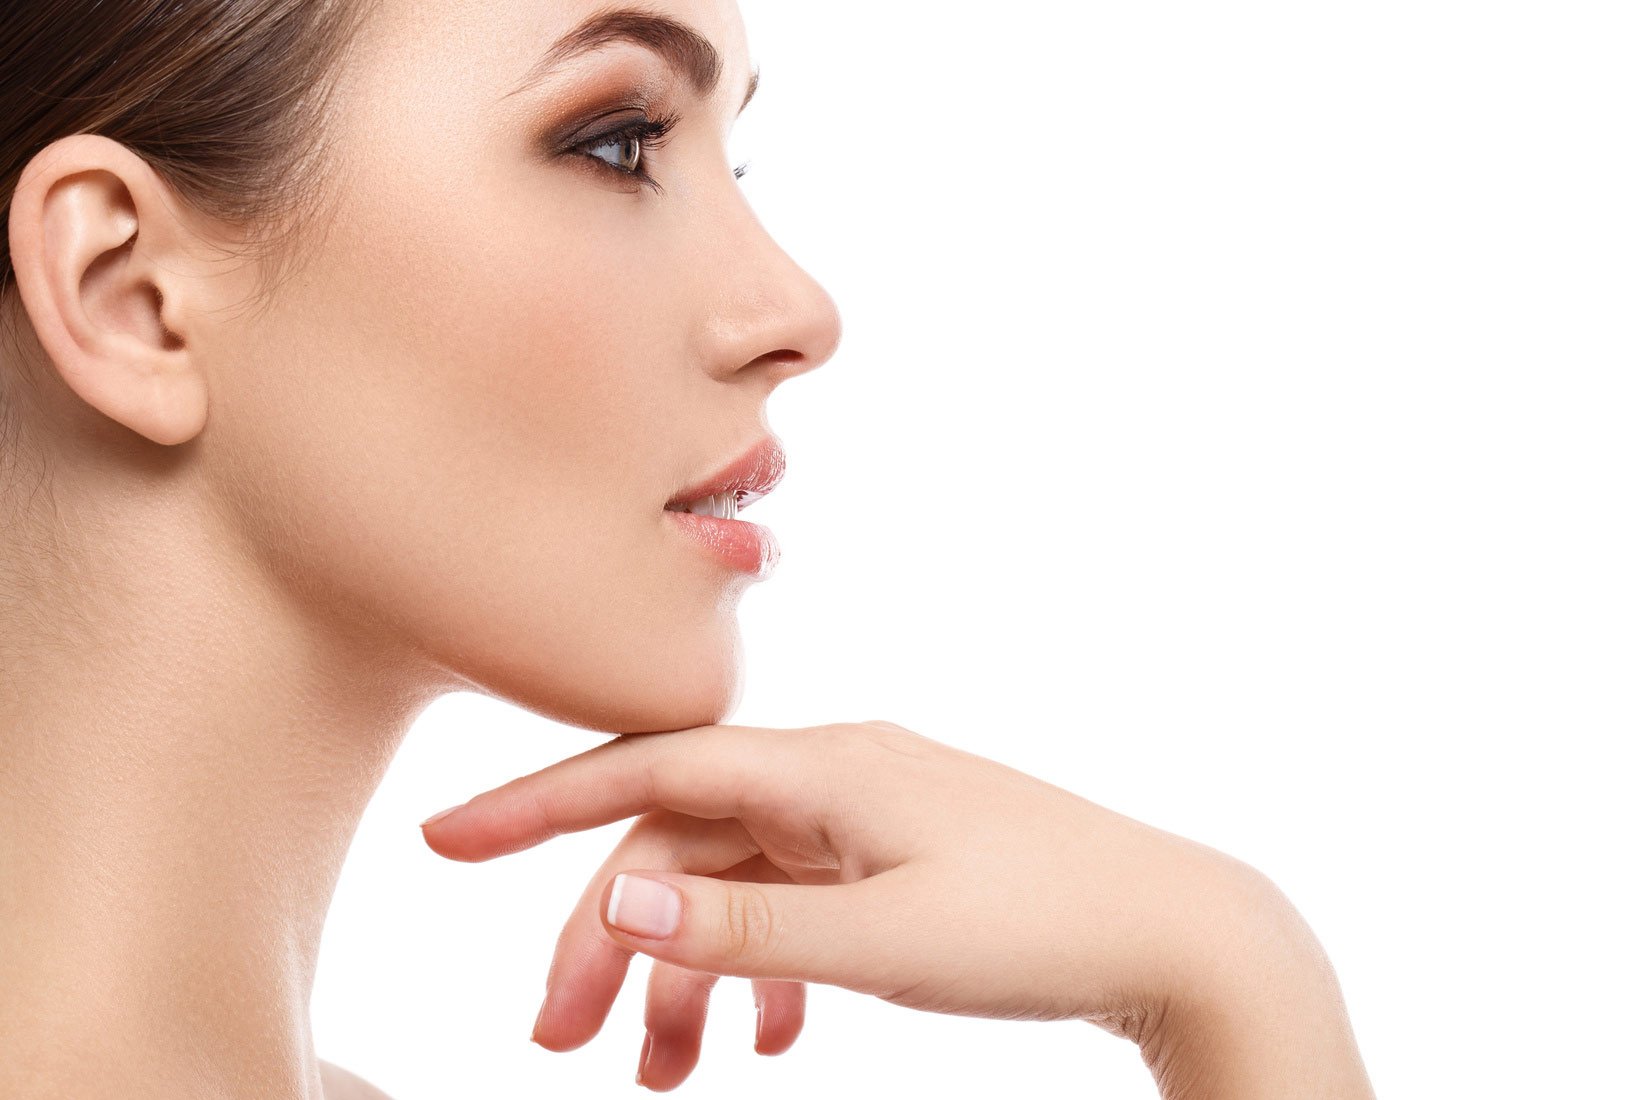 Chamomile - Natural Skin Care Benefits